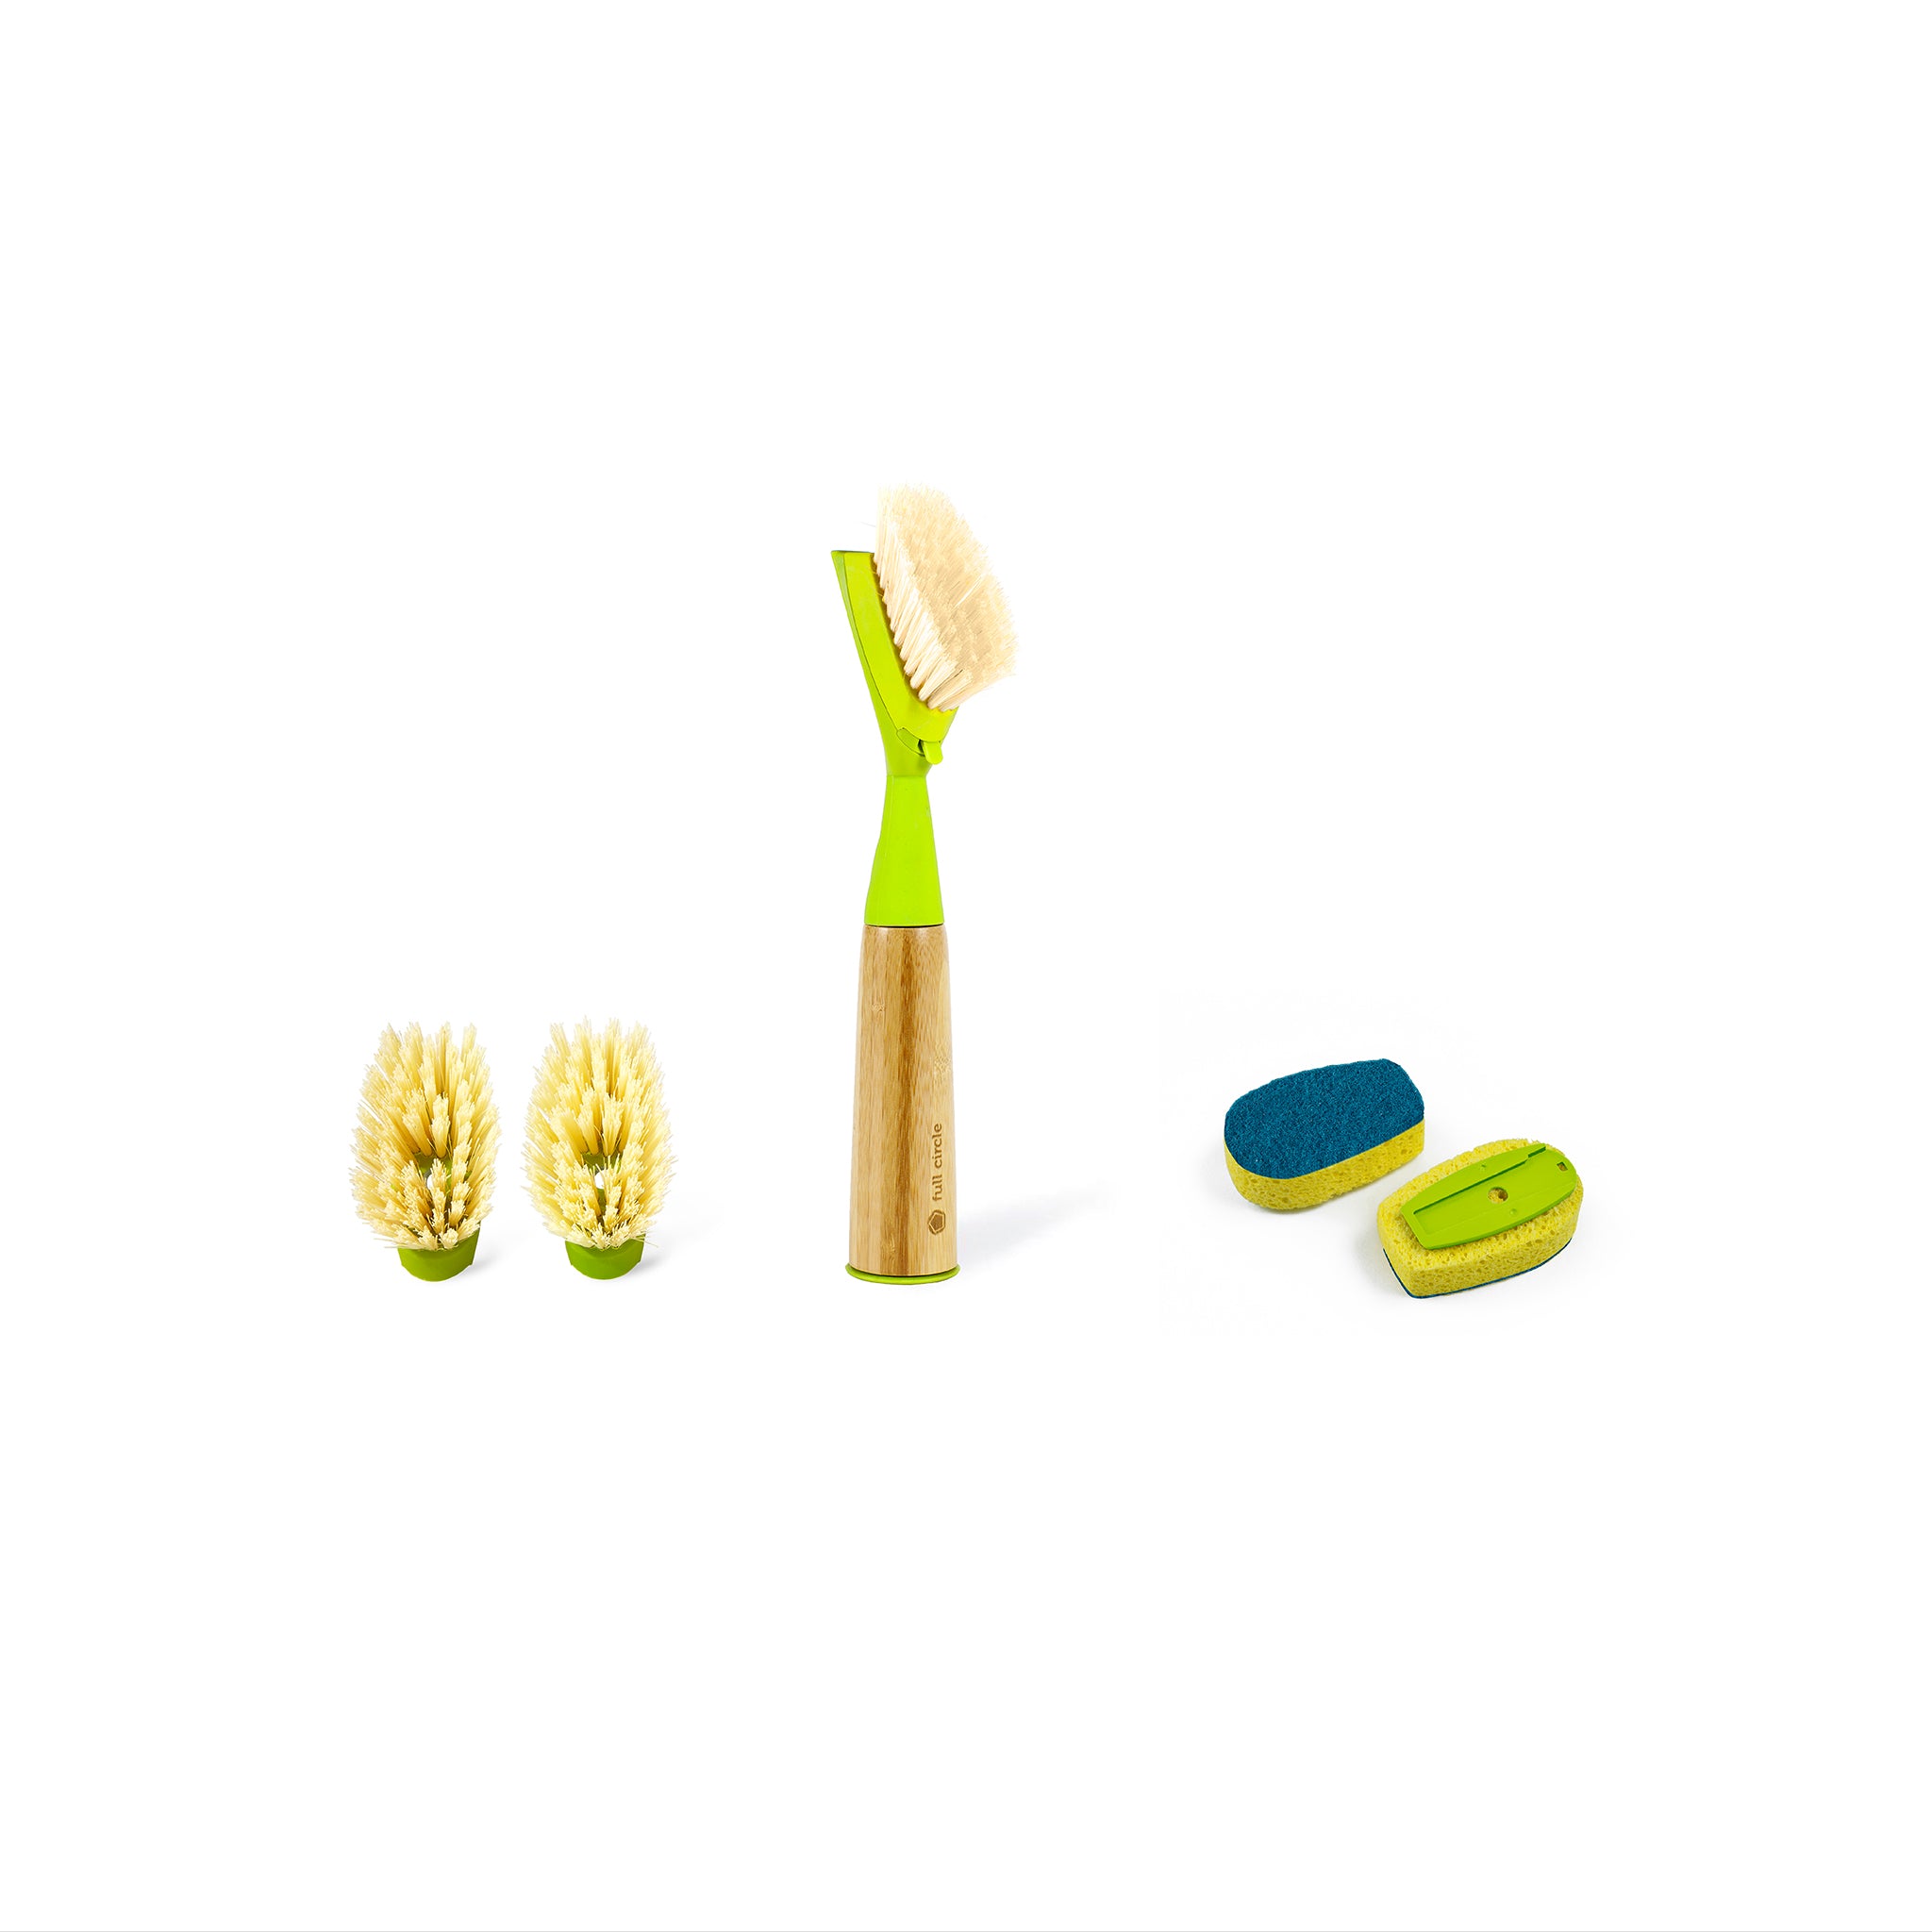  Full Circle Dish Brush Suds Up Soap Dispensing Bamboo Handle :  Health & Household